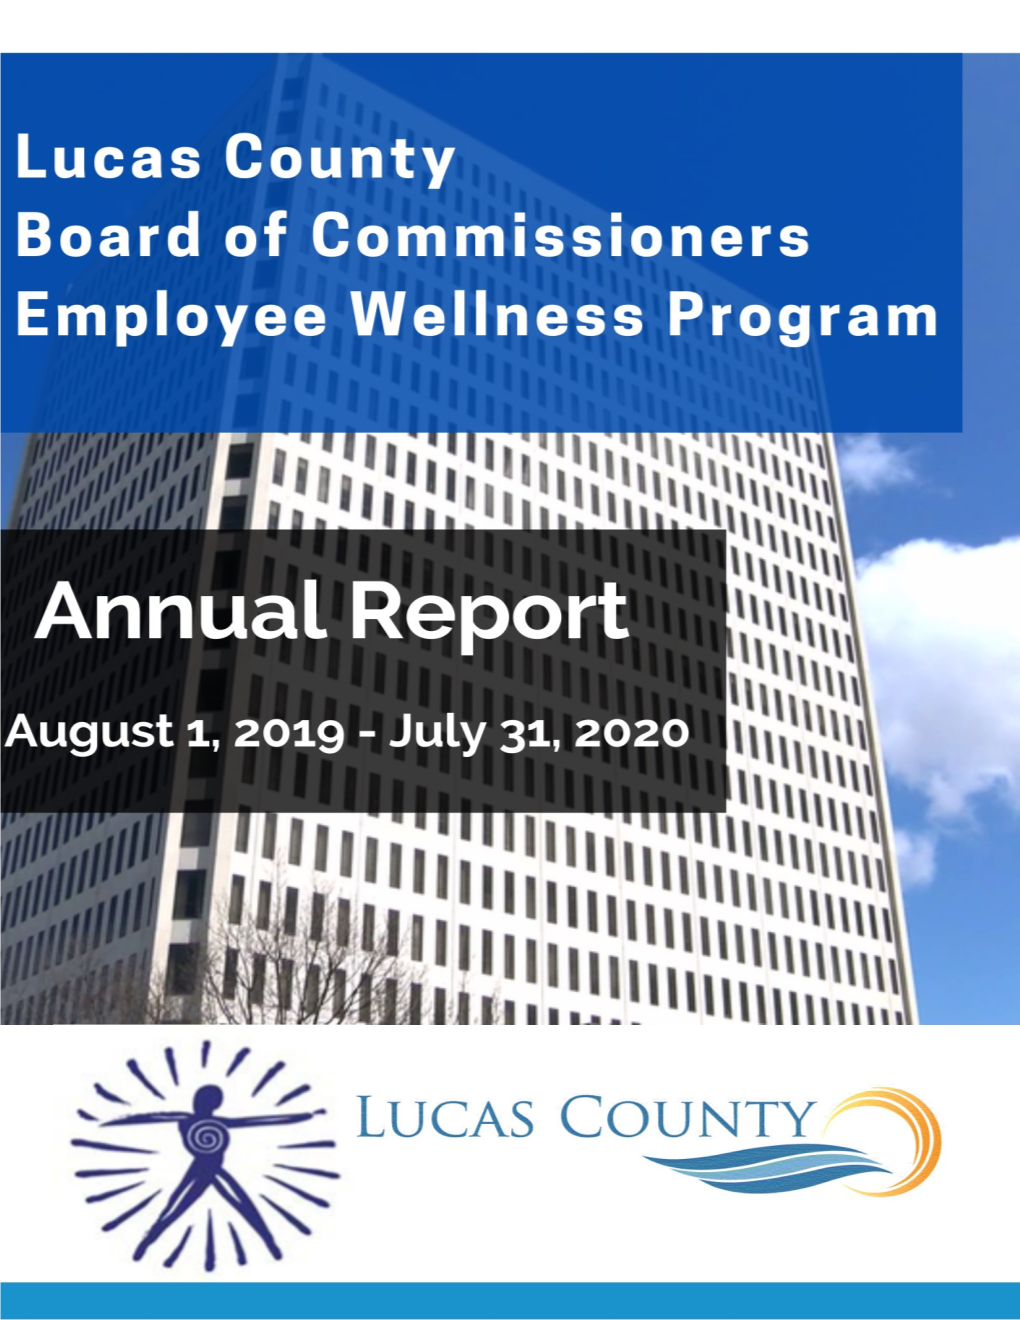 The Lucas County Employee Wellness Program Health Coaches